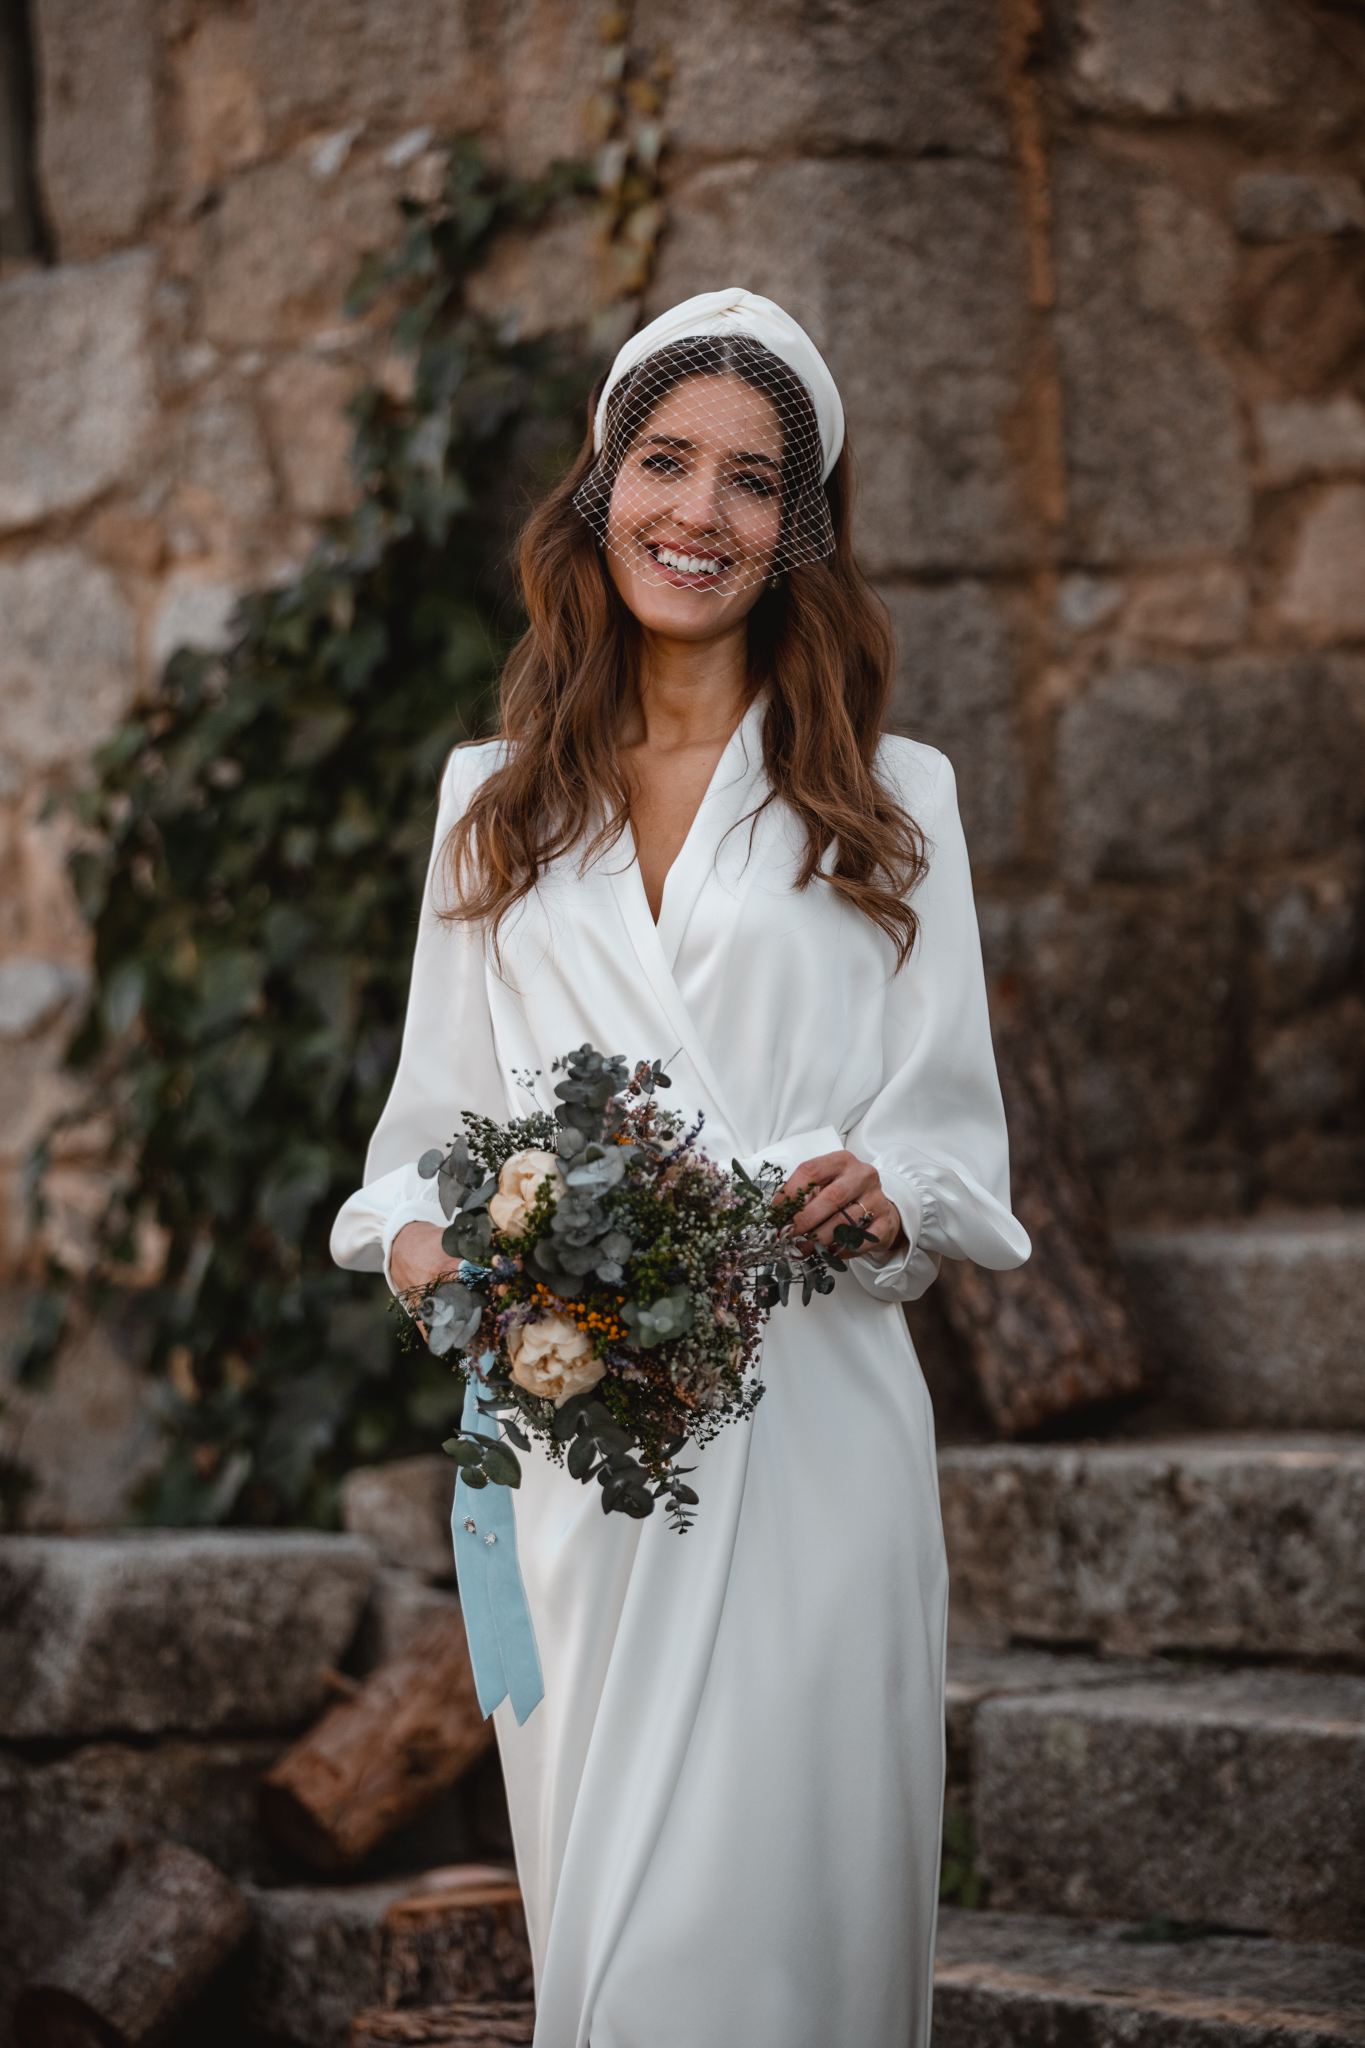 Vestido blanco midi para comunión, bautizo o boda civil